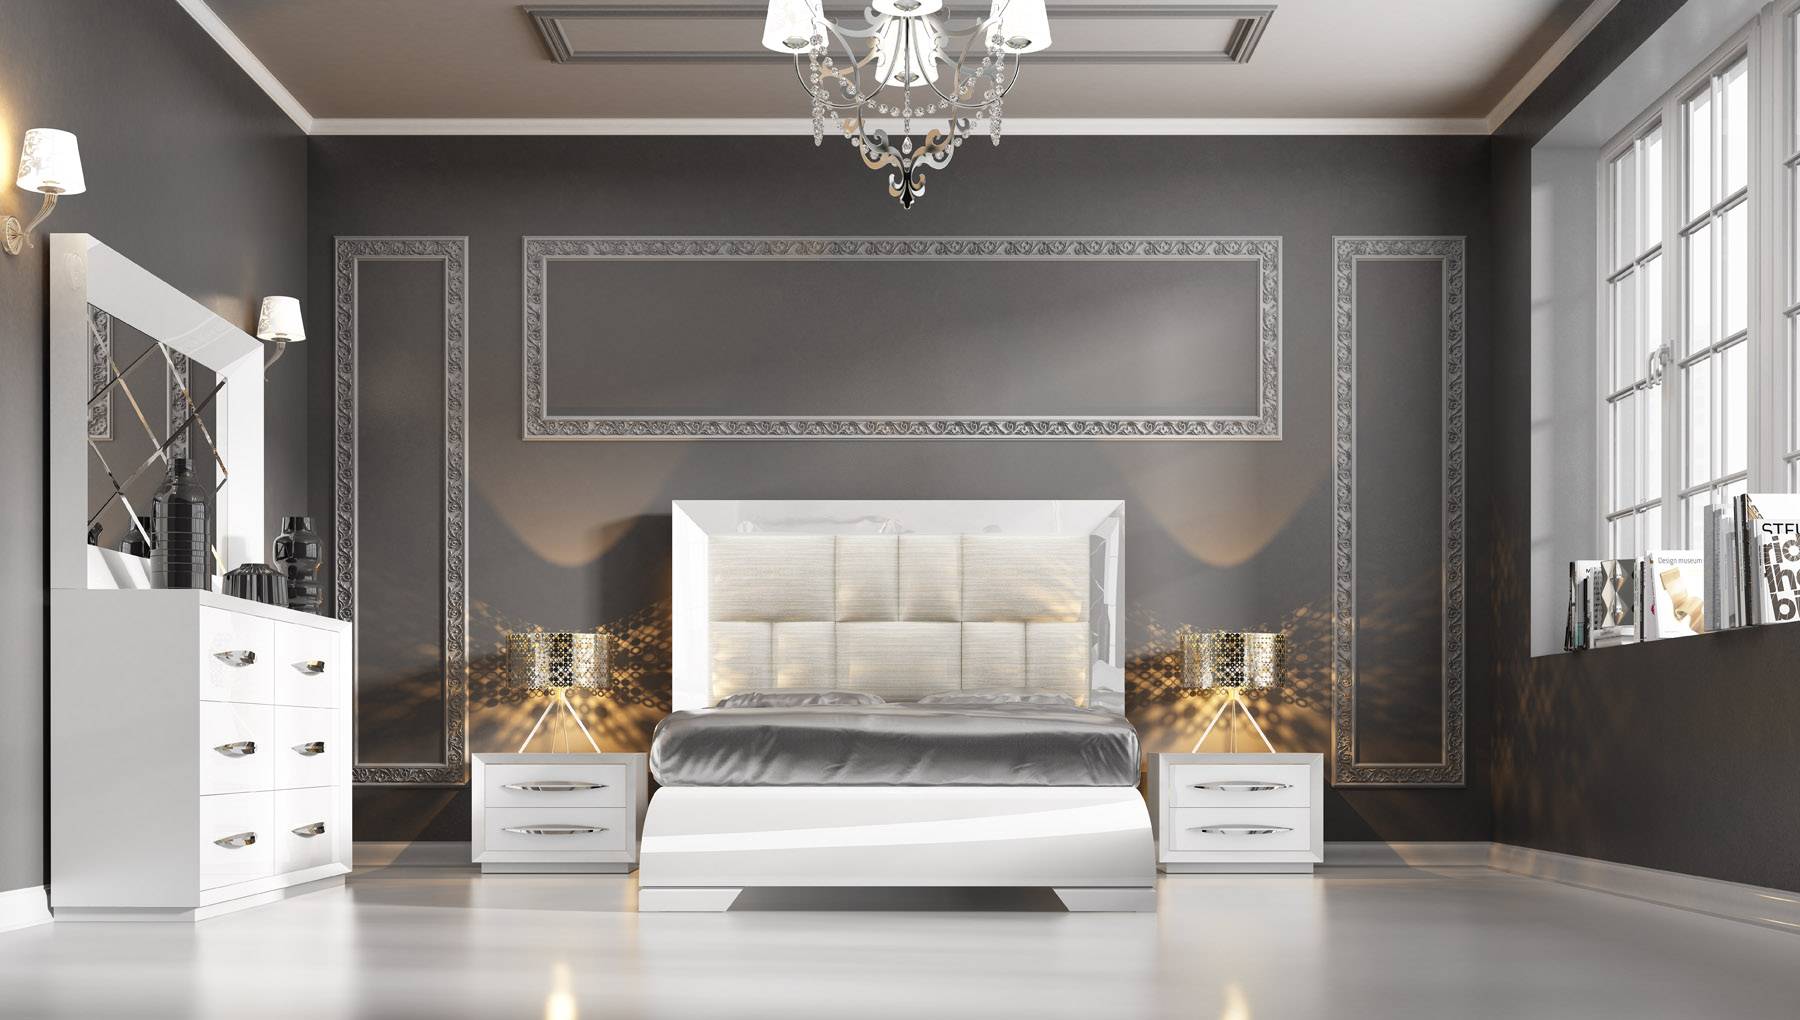 Made in Spain Wood Luxury Bedroom Furniture Sets Fort Worth Texas ESF